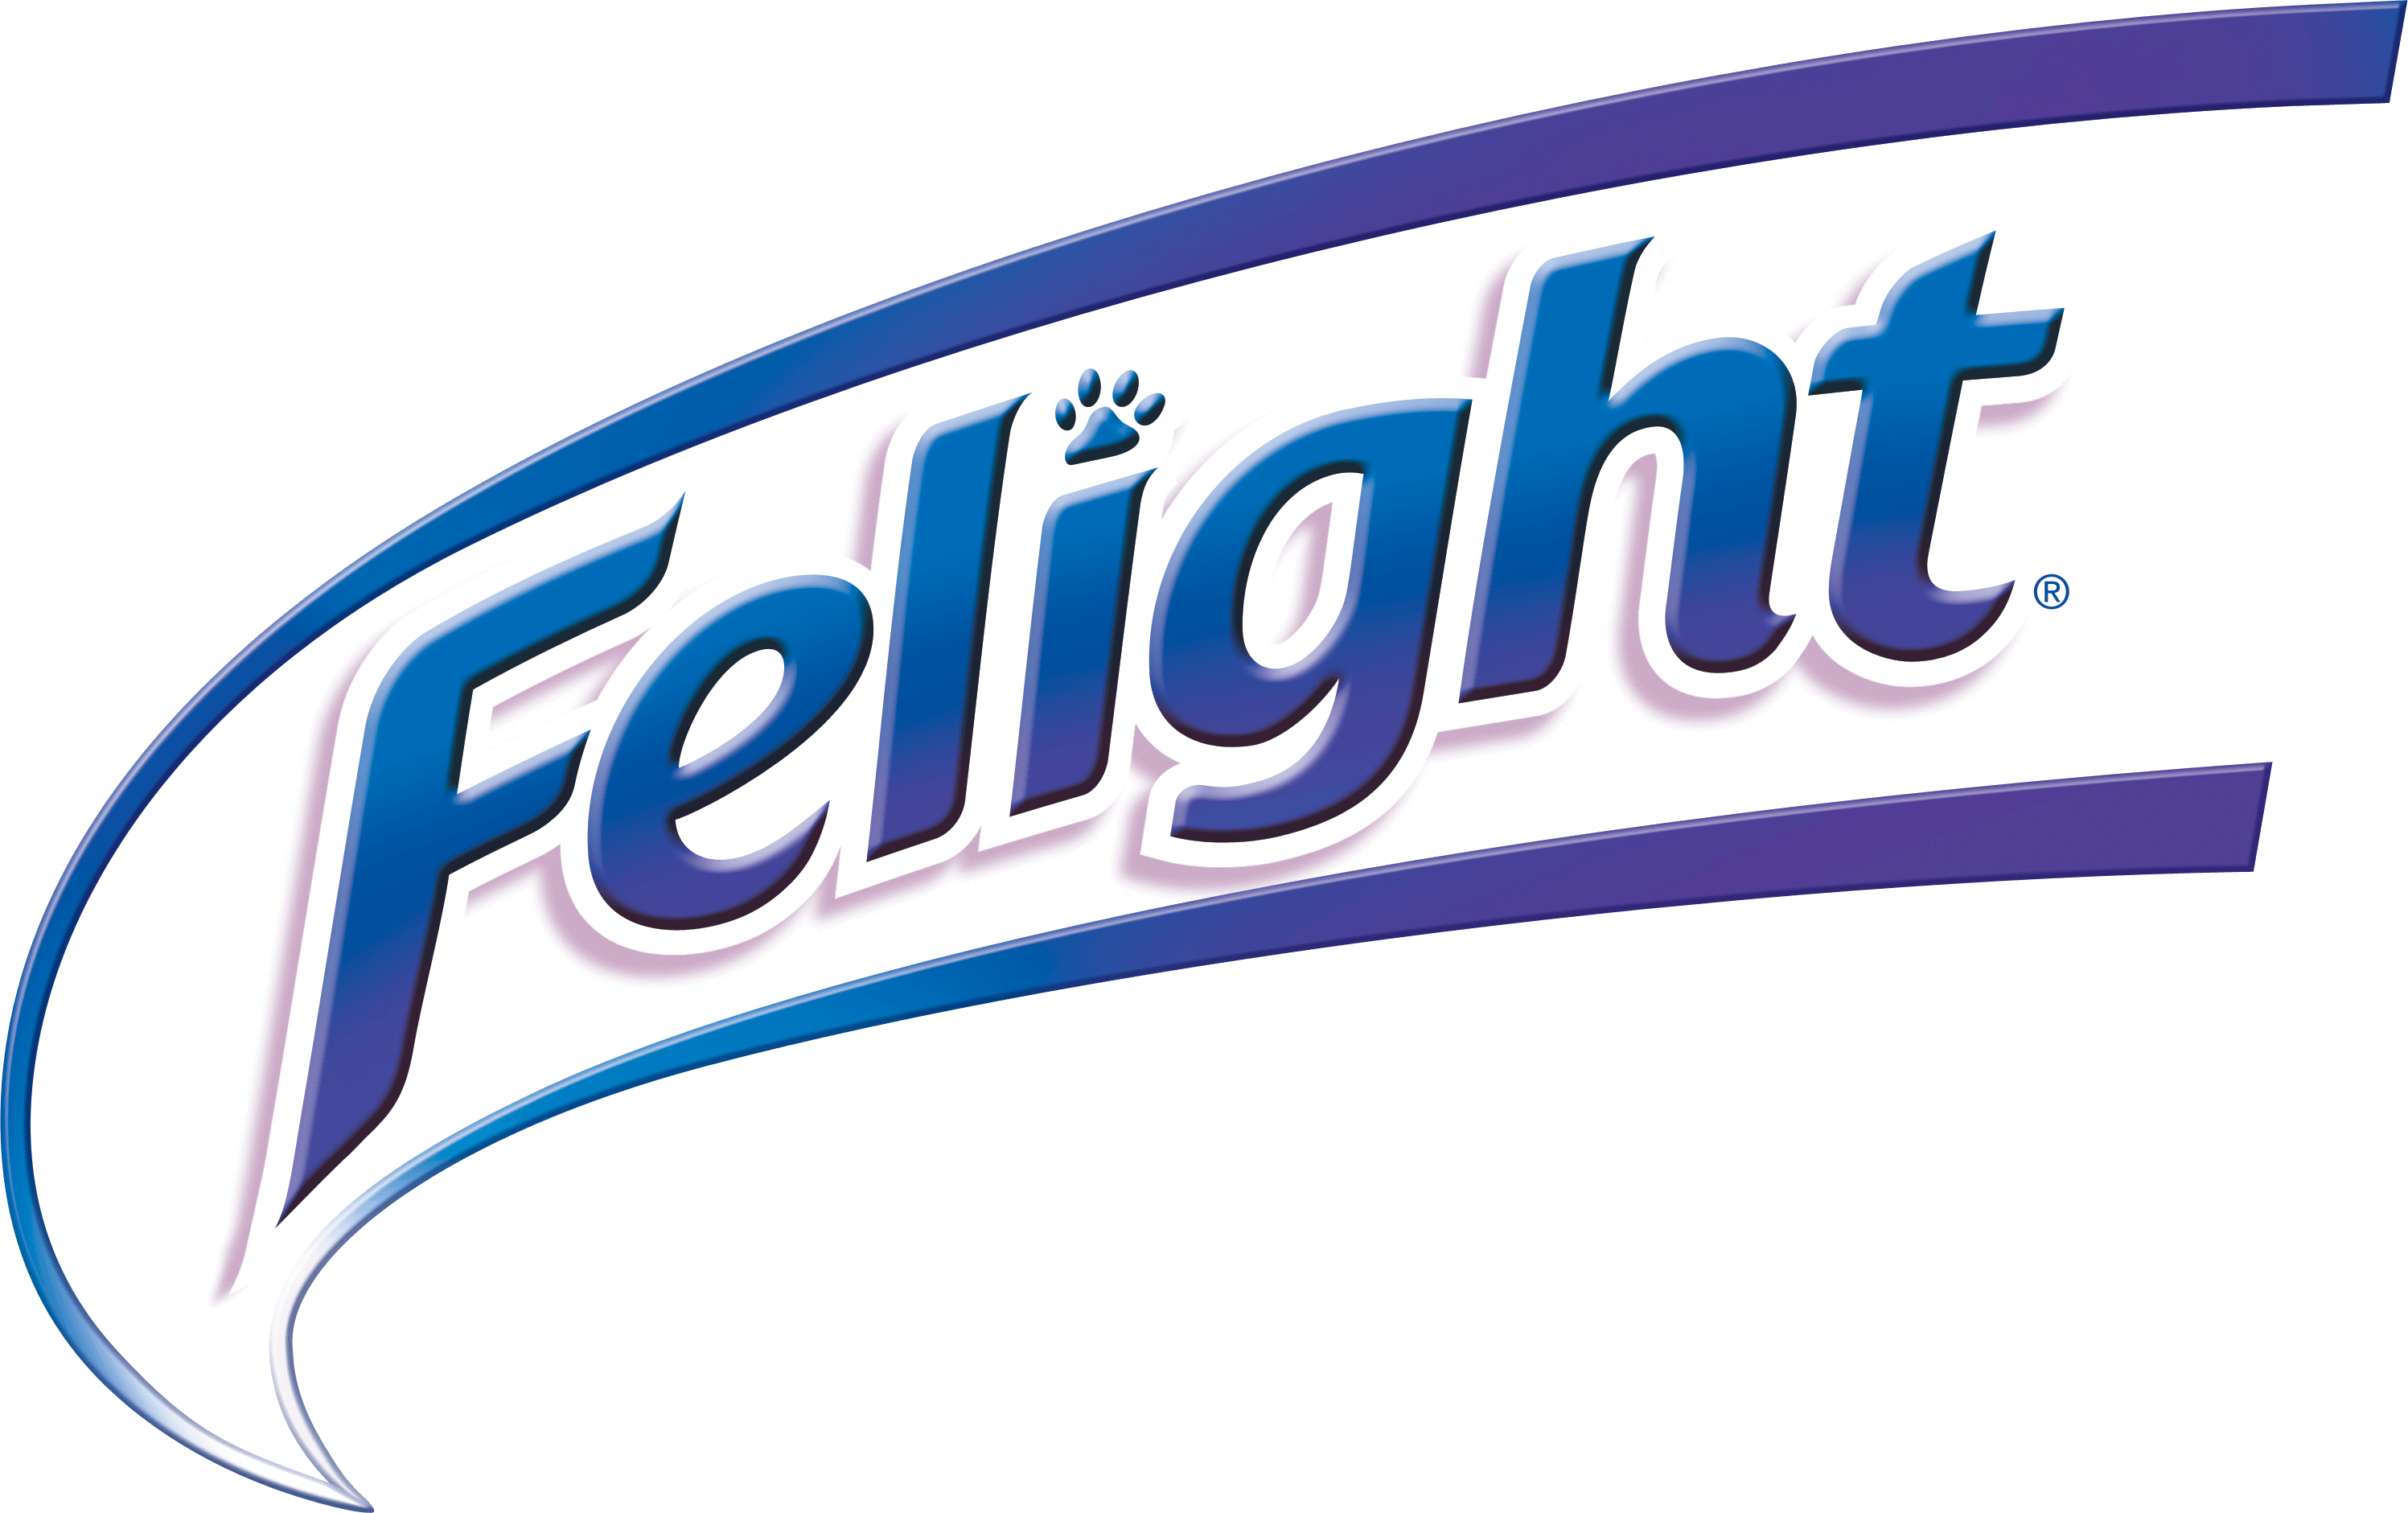 Felight